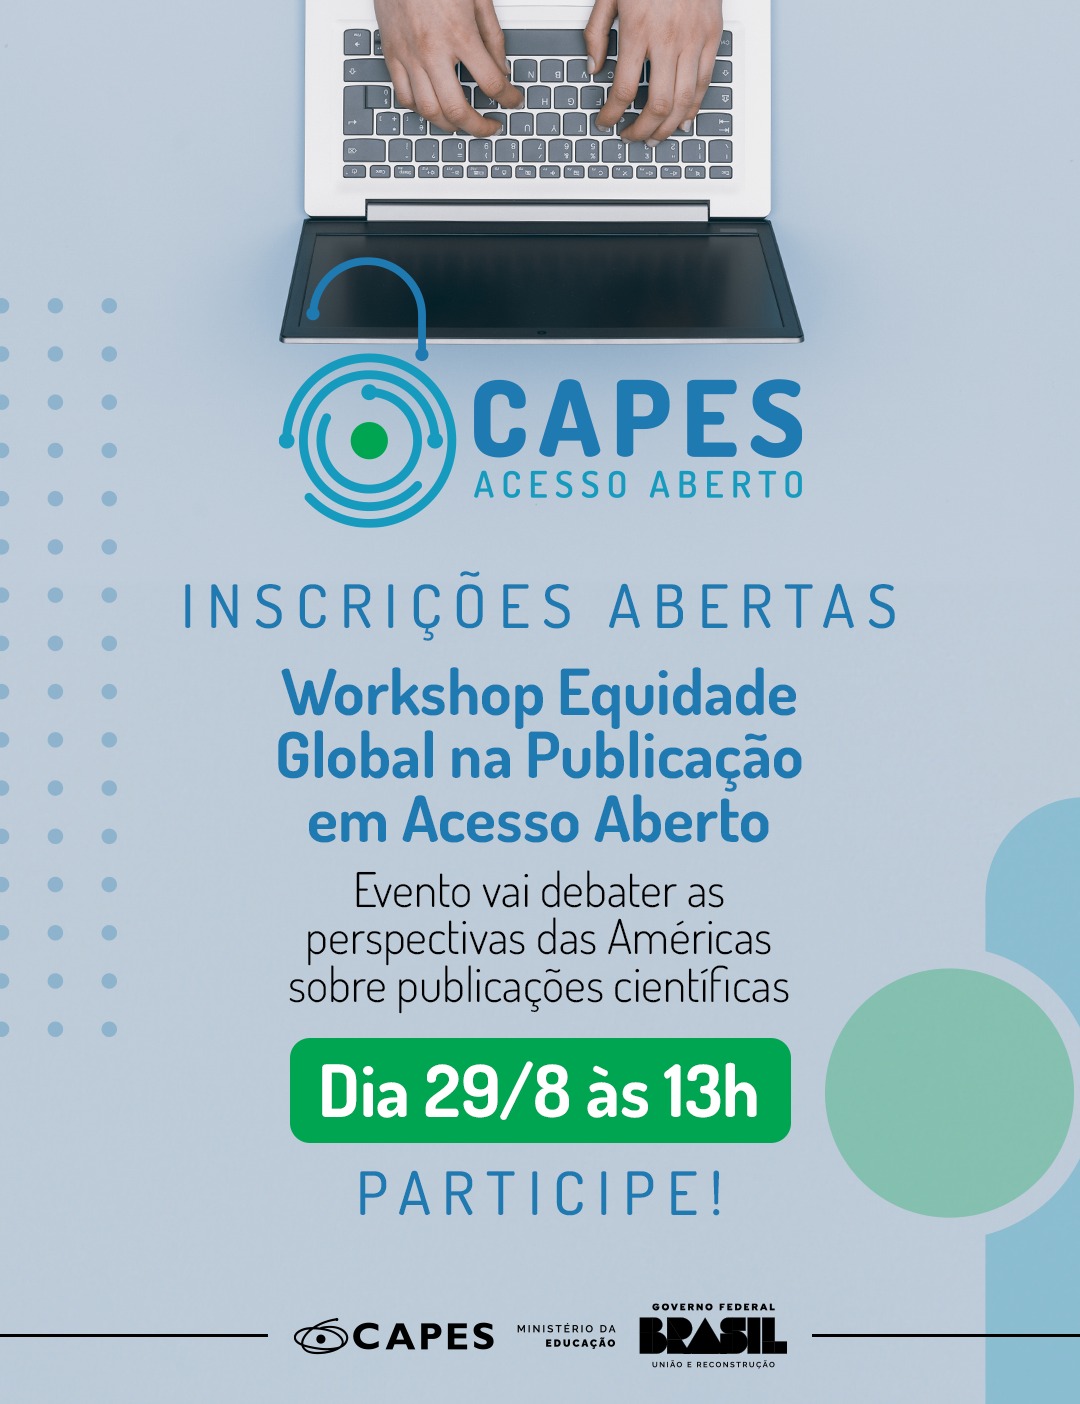 Workshop da Capes debate equidade no Acesso Aberto